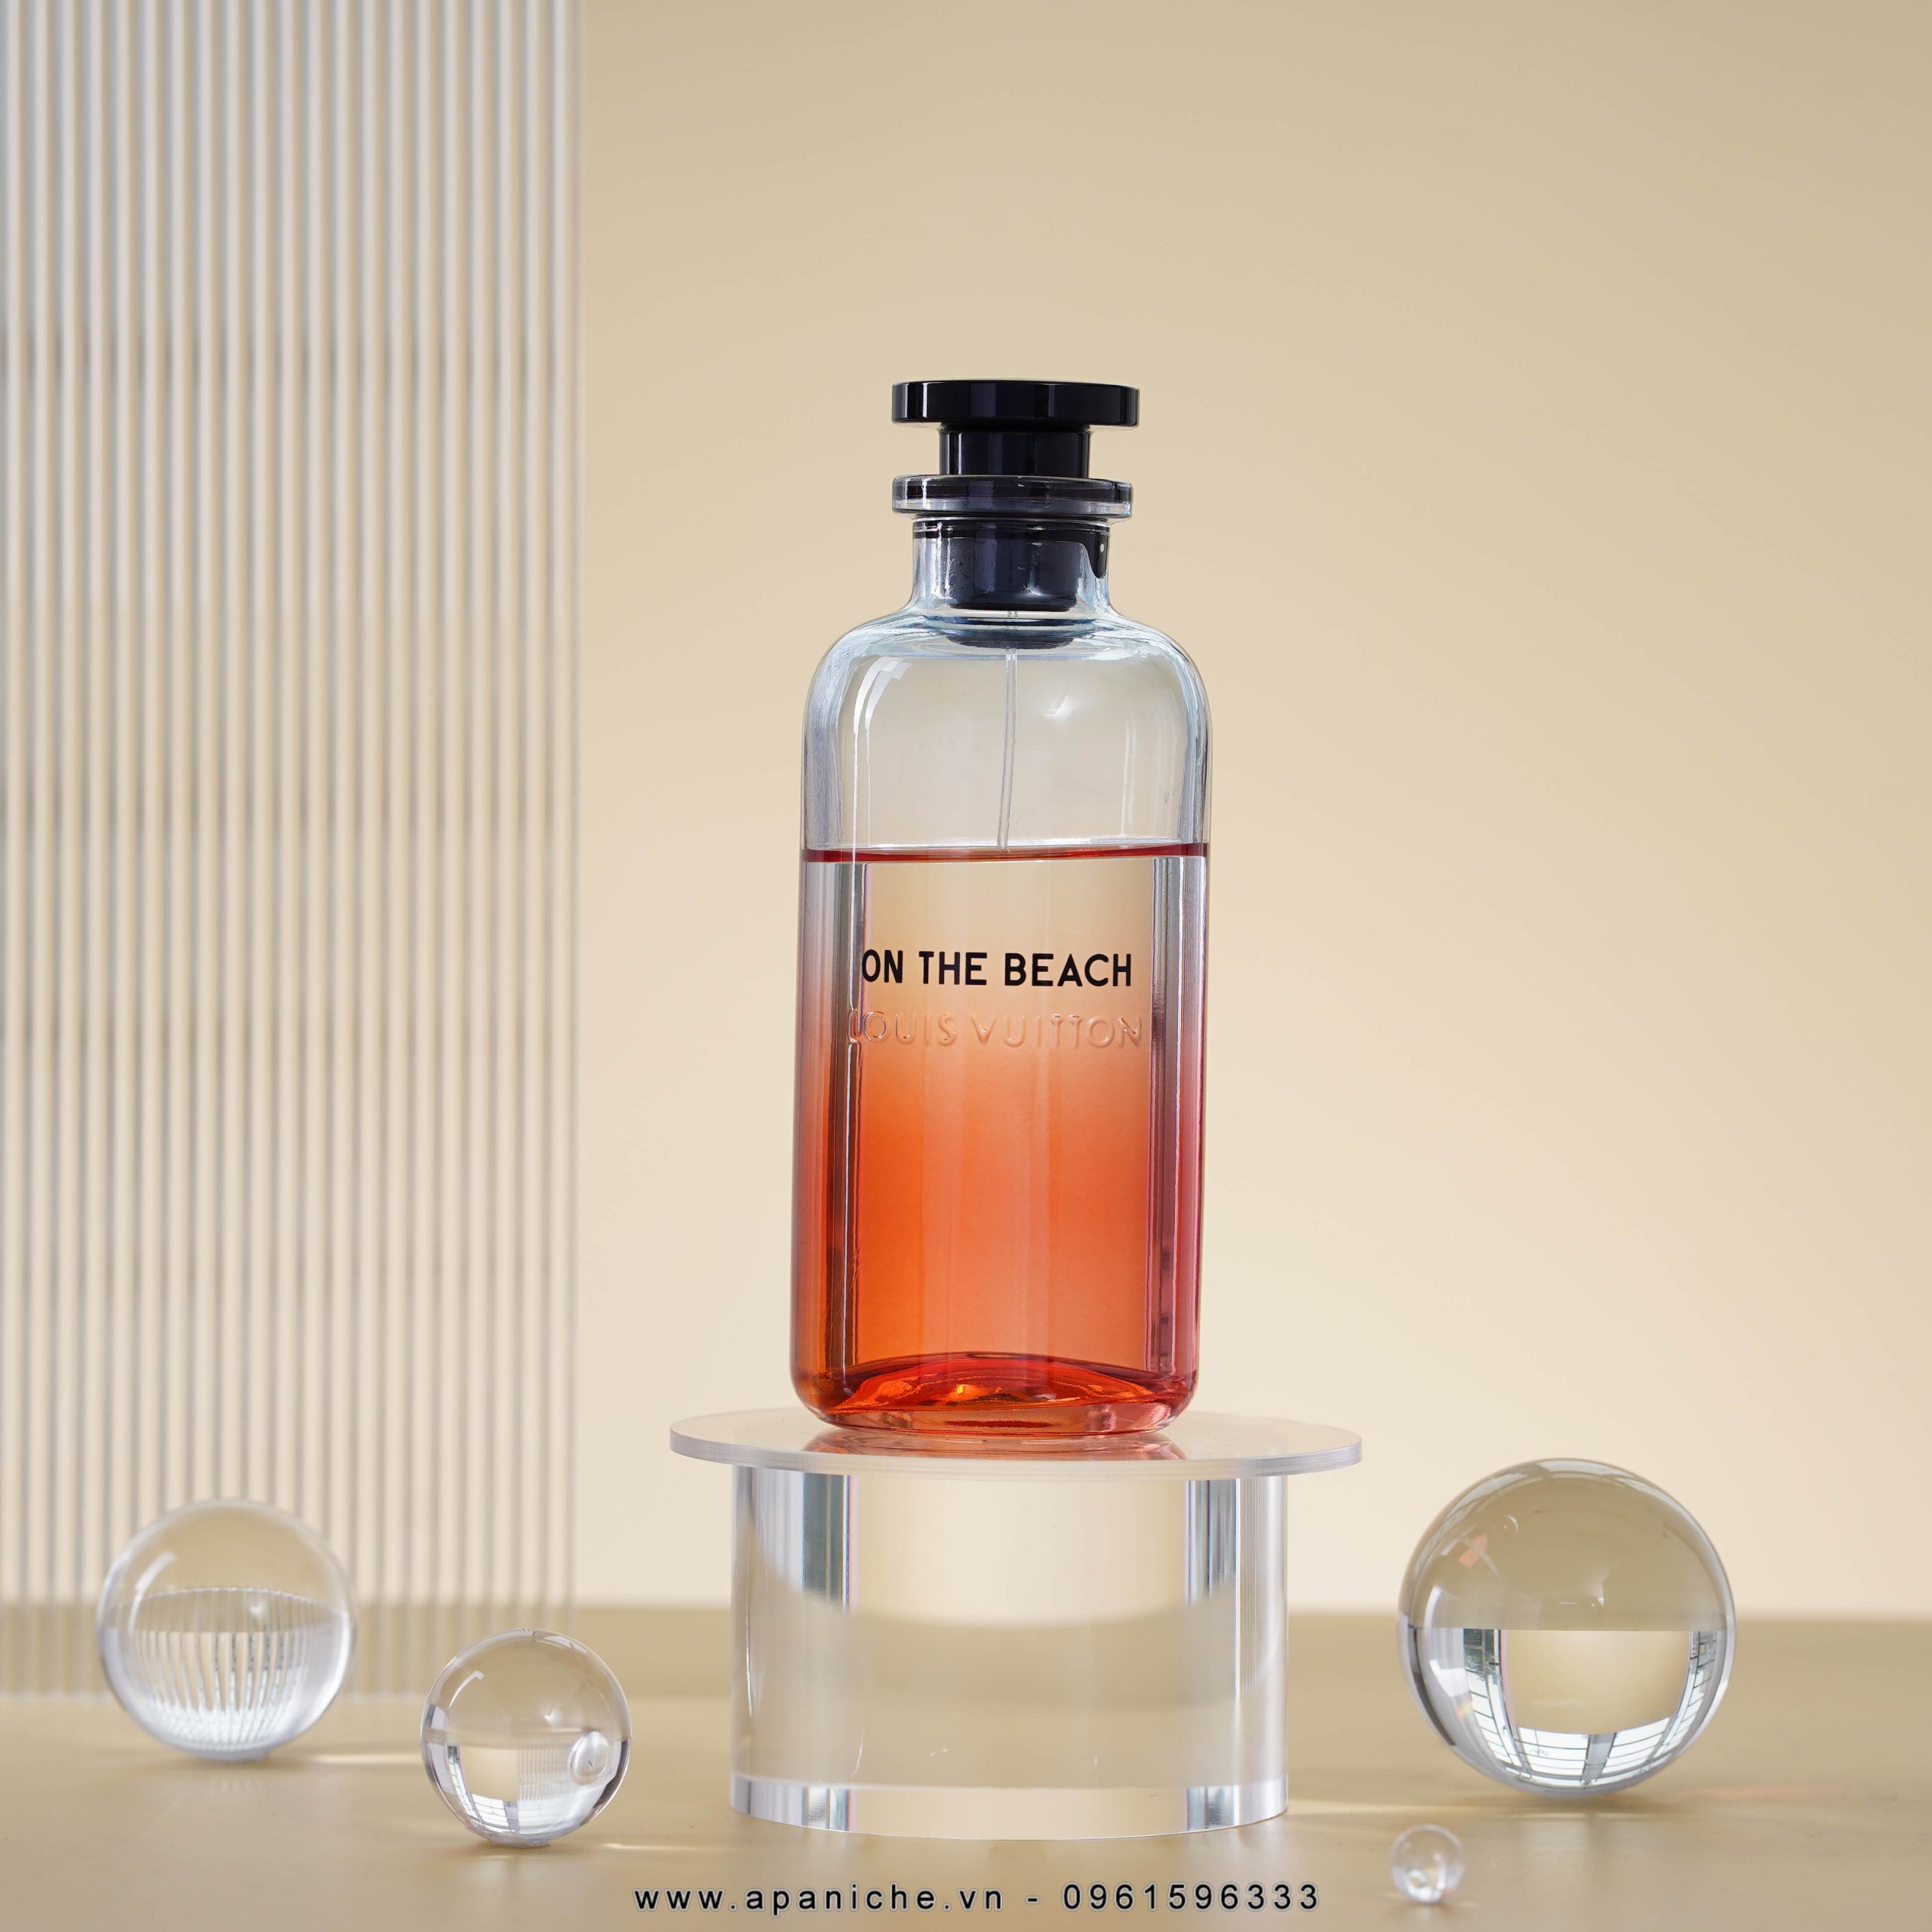 The new Louis Vuitton fragrance bottles hide inside them the brilliant  summer sun